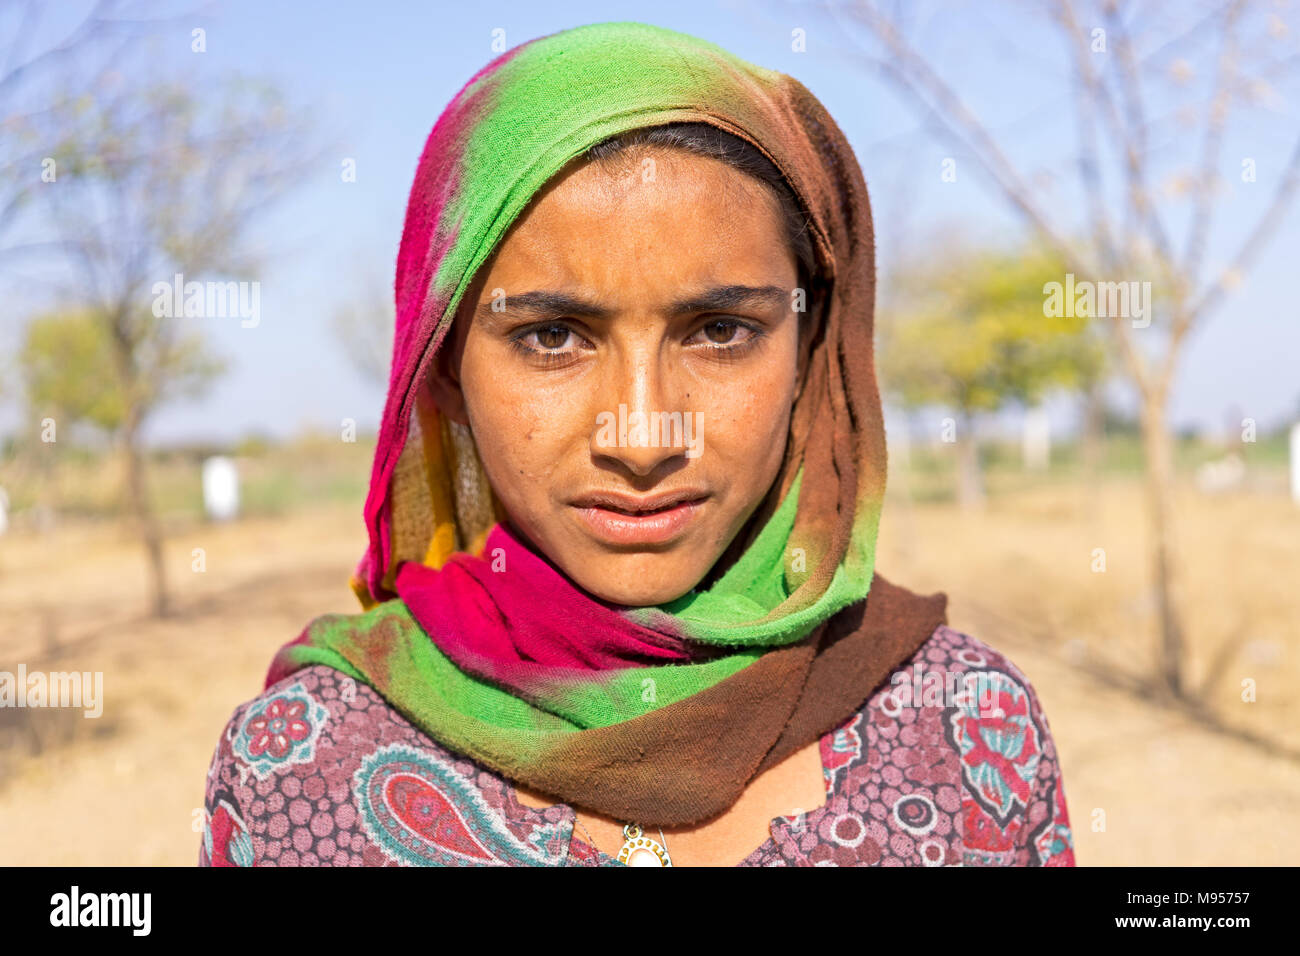 Khara Rajasthan, India - 25 de febrero de 2018: Retrato de una joven indígena con el velo. Foto de stock